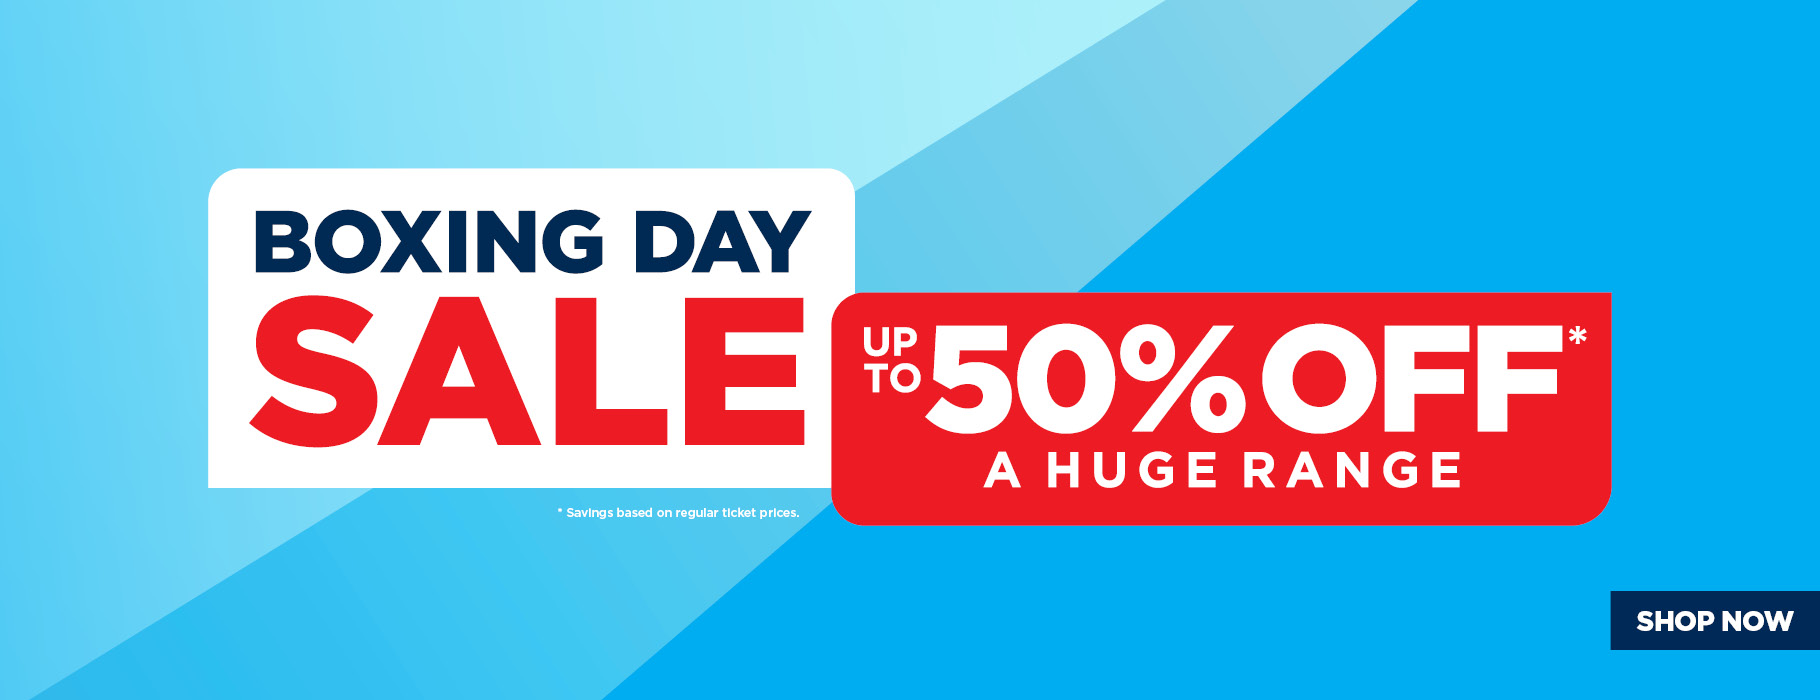 Amart Furniture Boxing Day sale up to 50% OFF on a huge range including outdoor, homeware & more